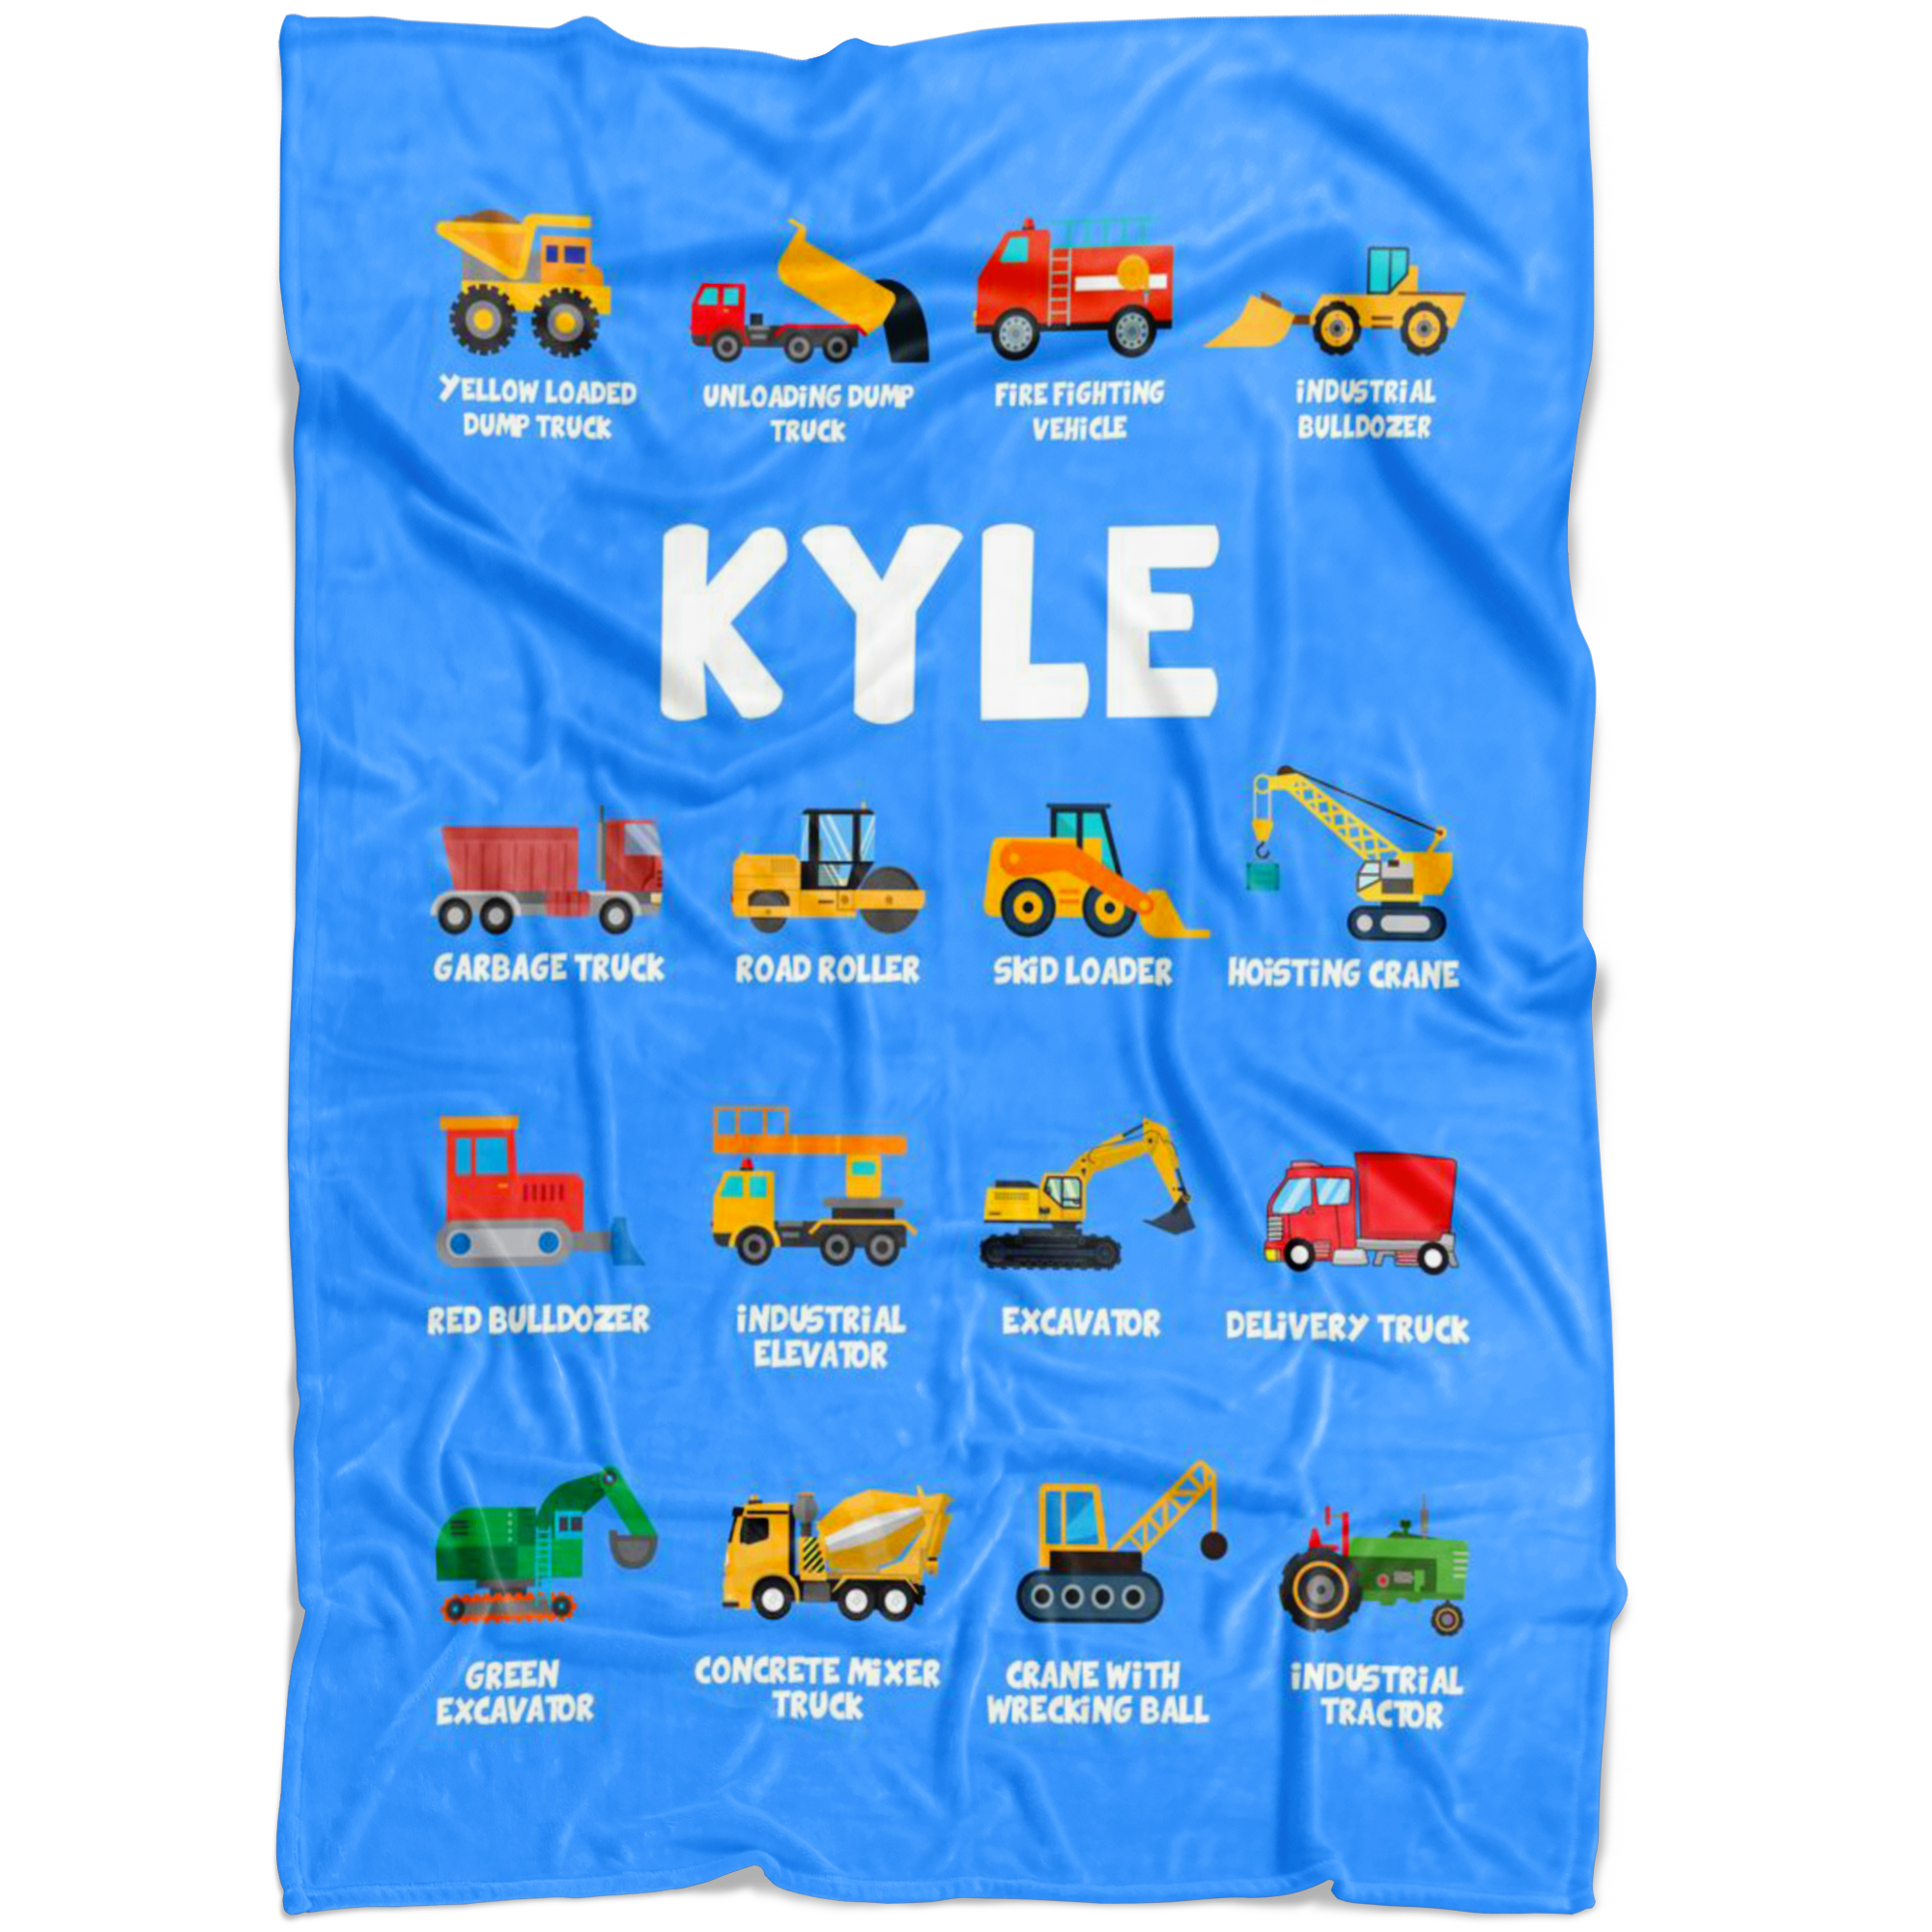 Kyle Construction Blanket Blue